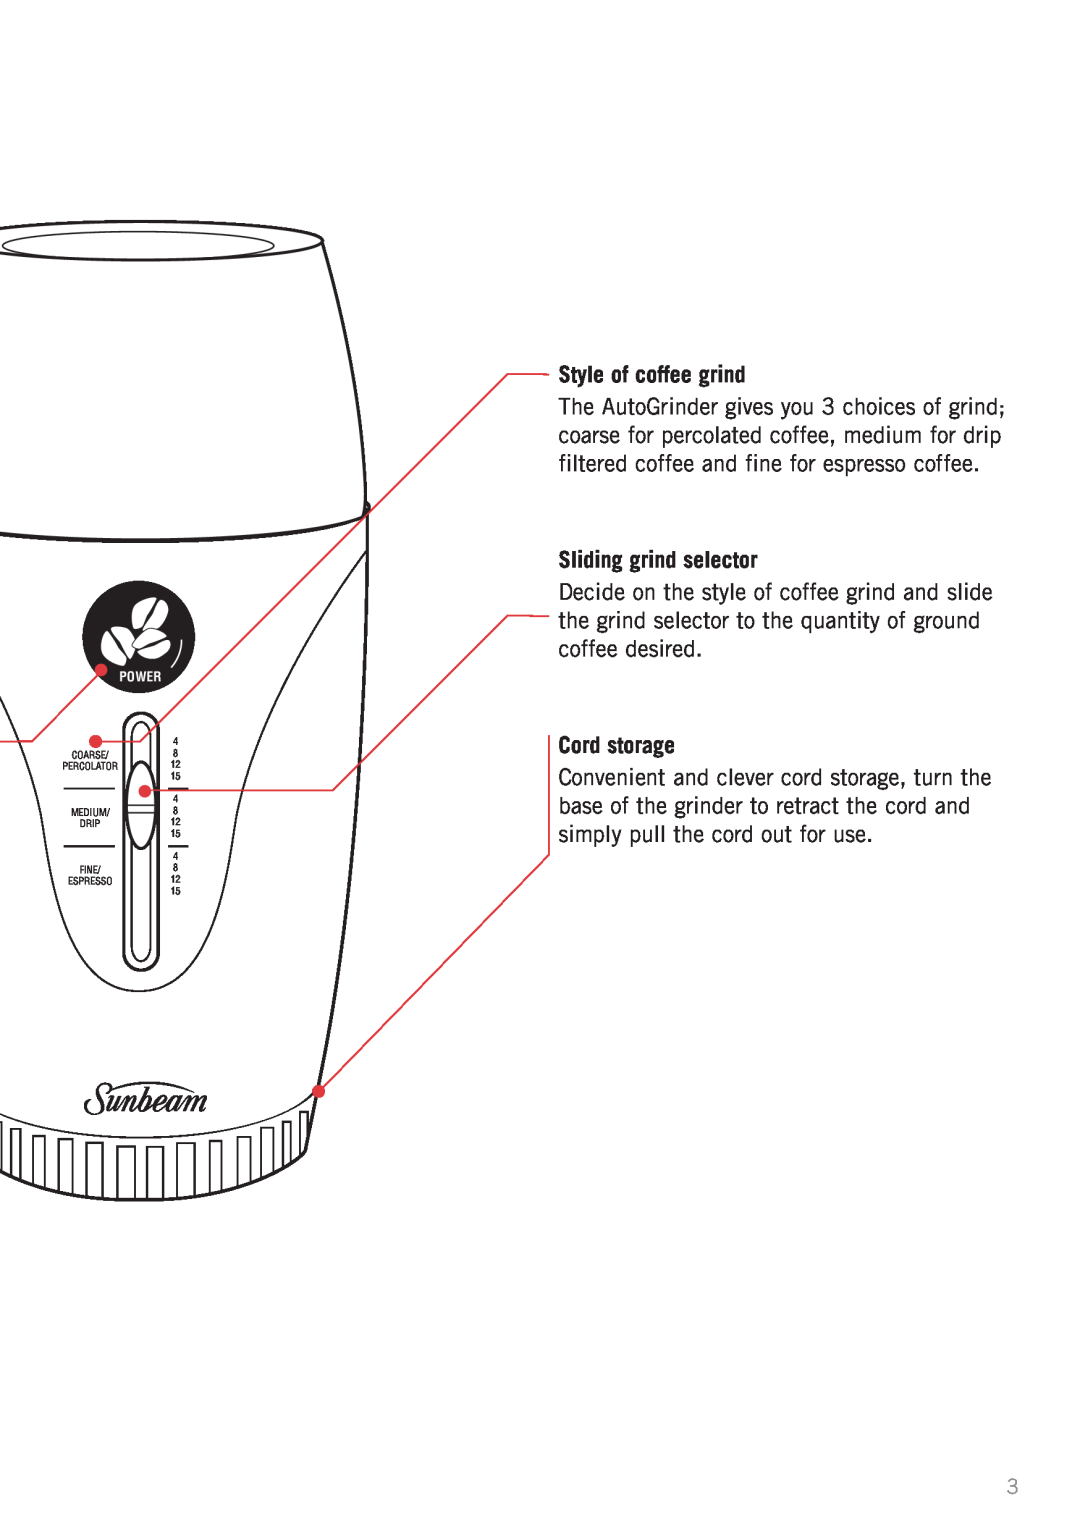 Sunbeam EM0415 manual Style of coffee grind, Sliding grind selector, Cord storage, Power 